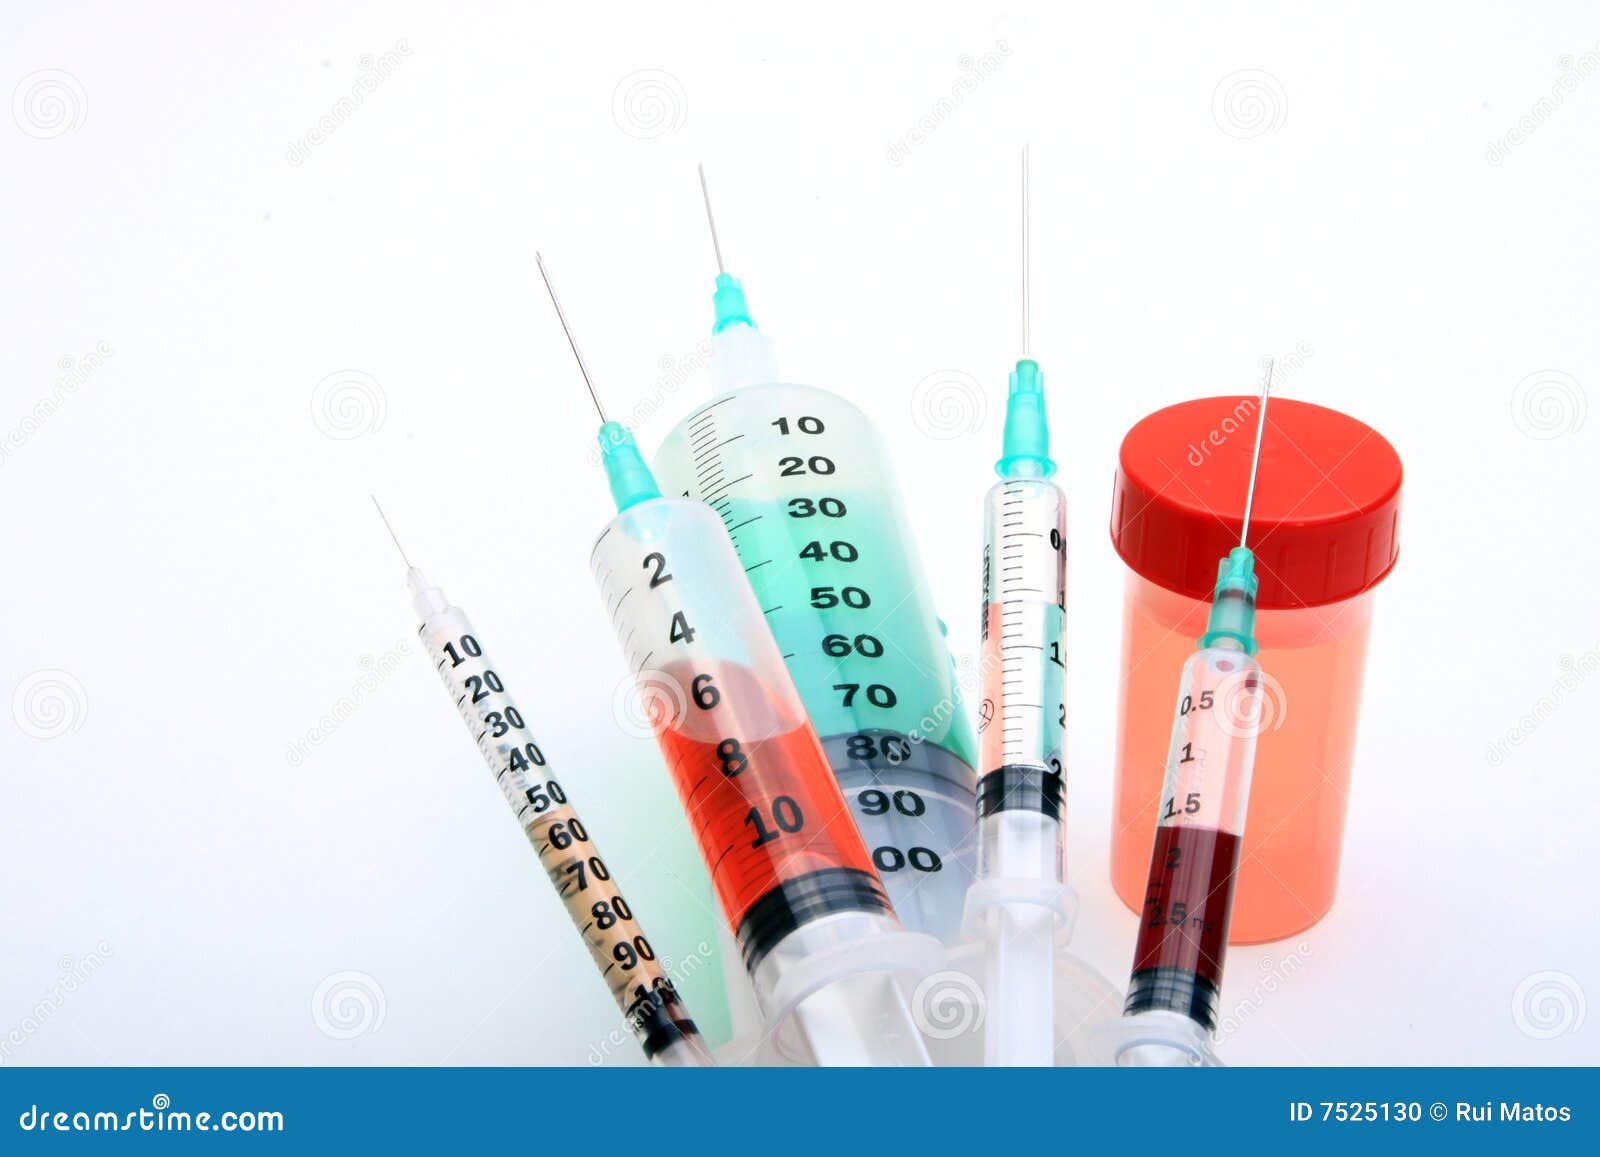 medical syringes and urine vial